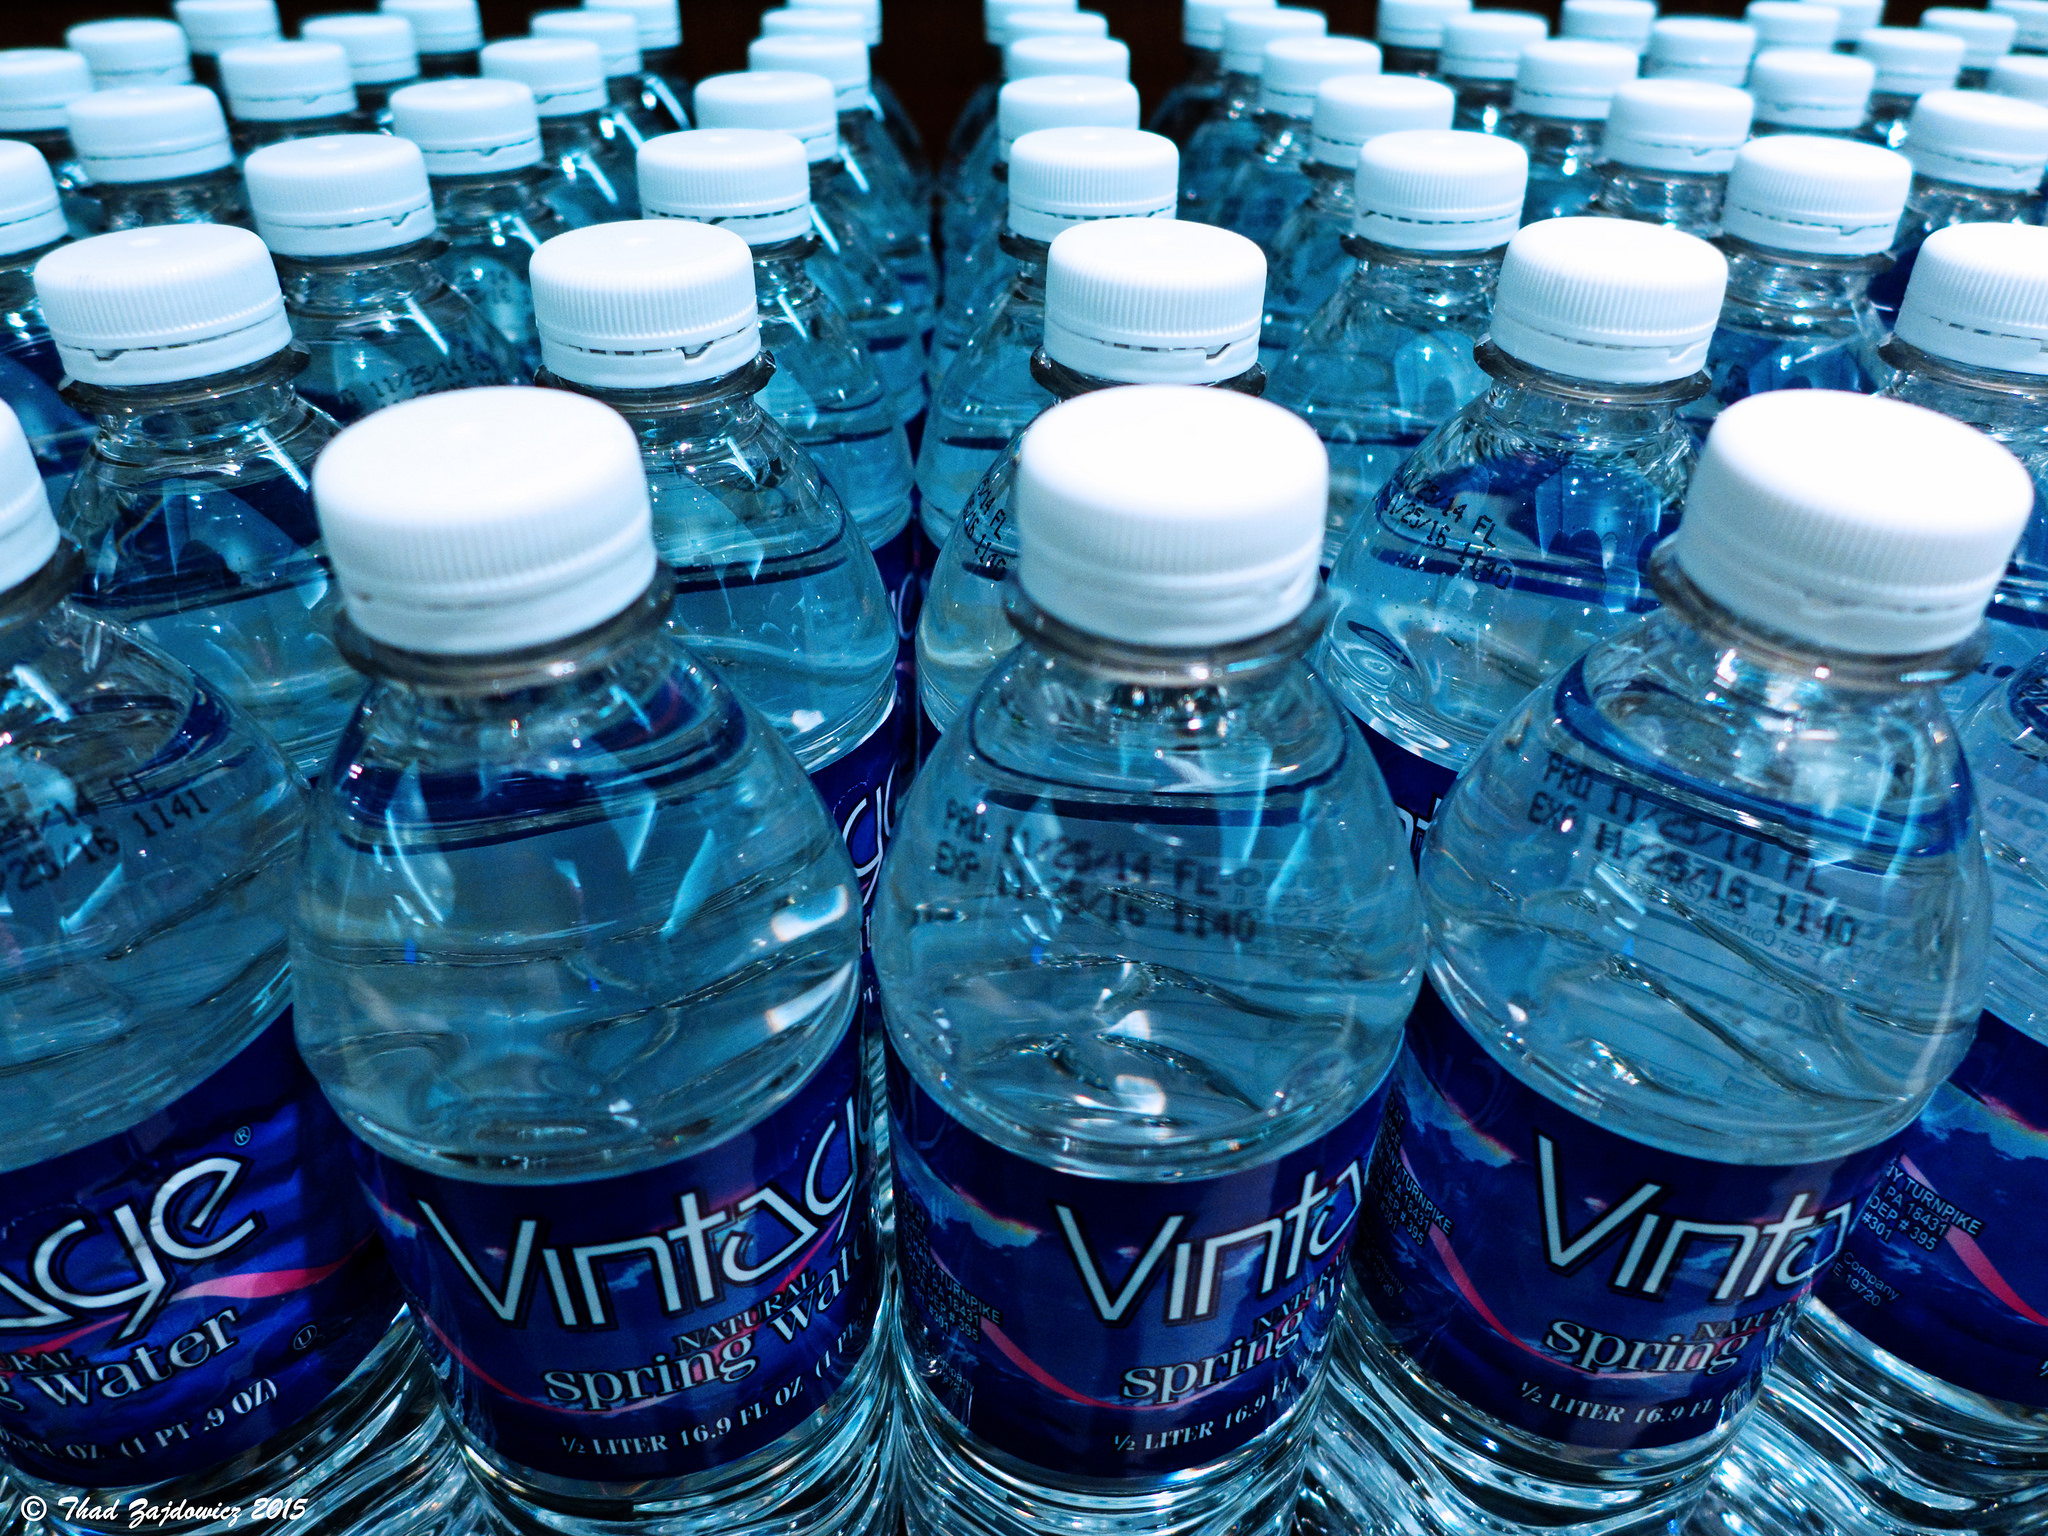 Water bottles. (Credit: Thad Zajdowicz/ Flickr)